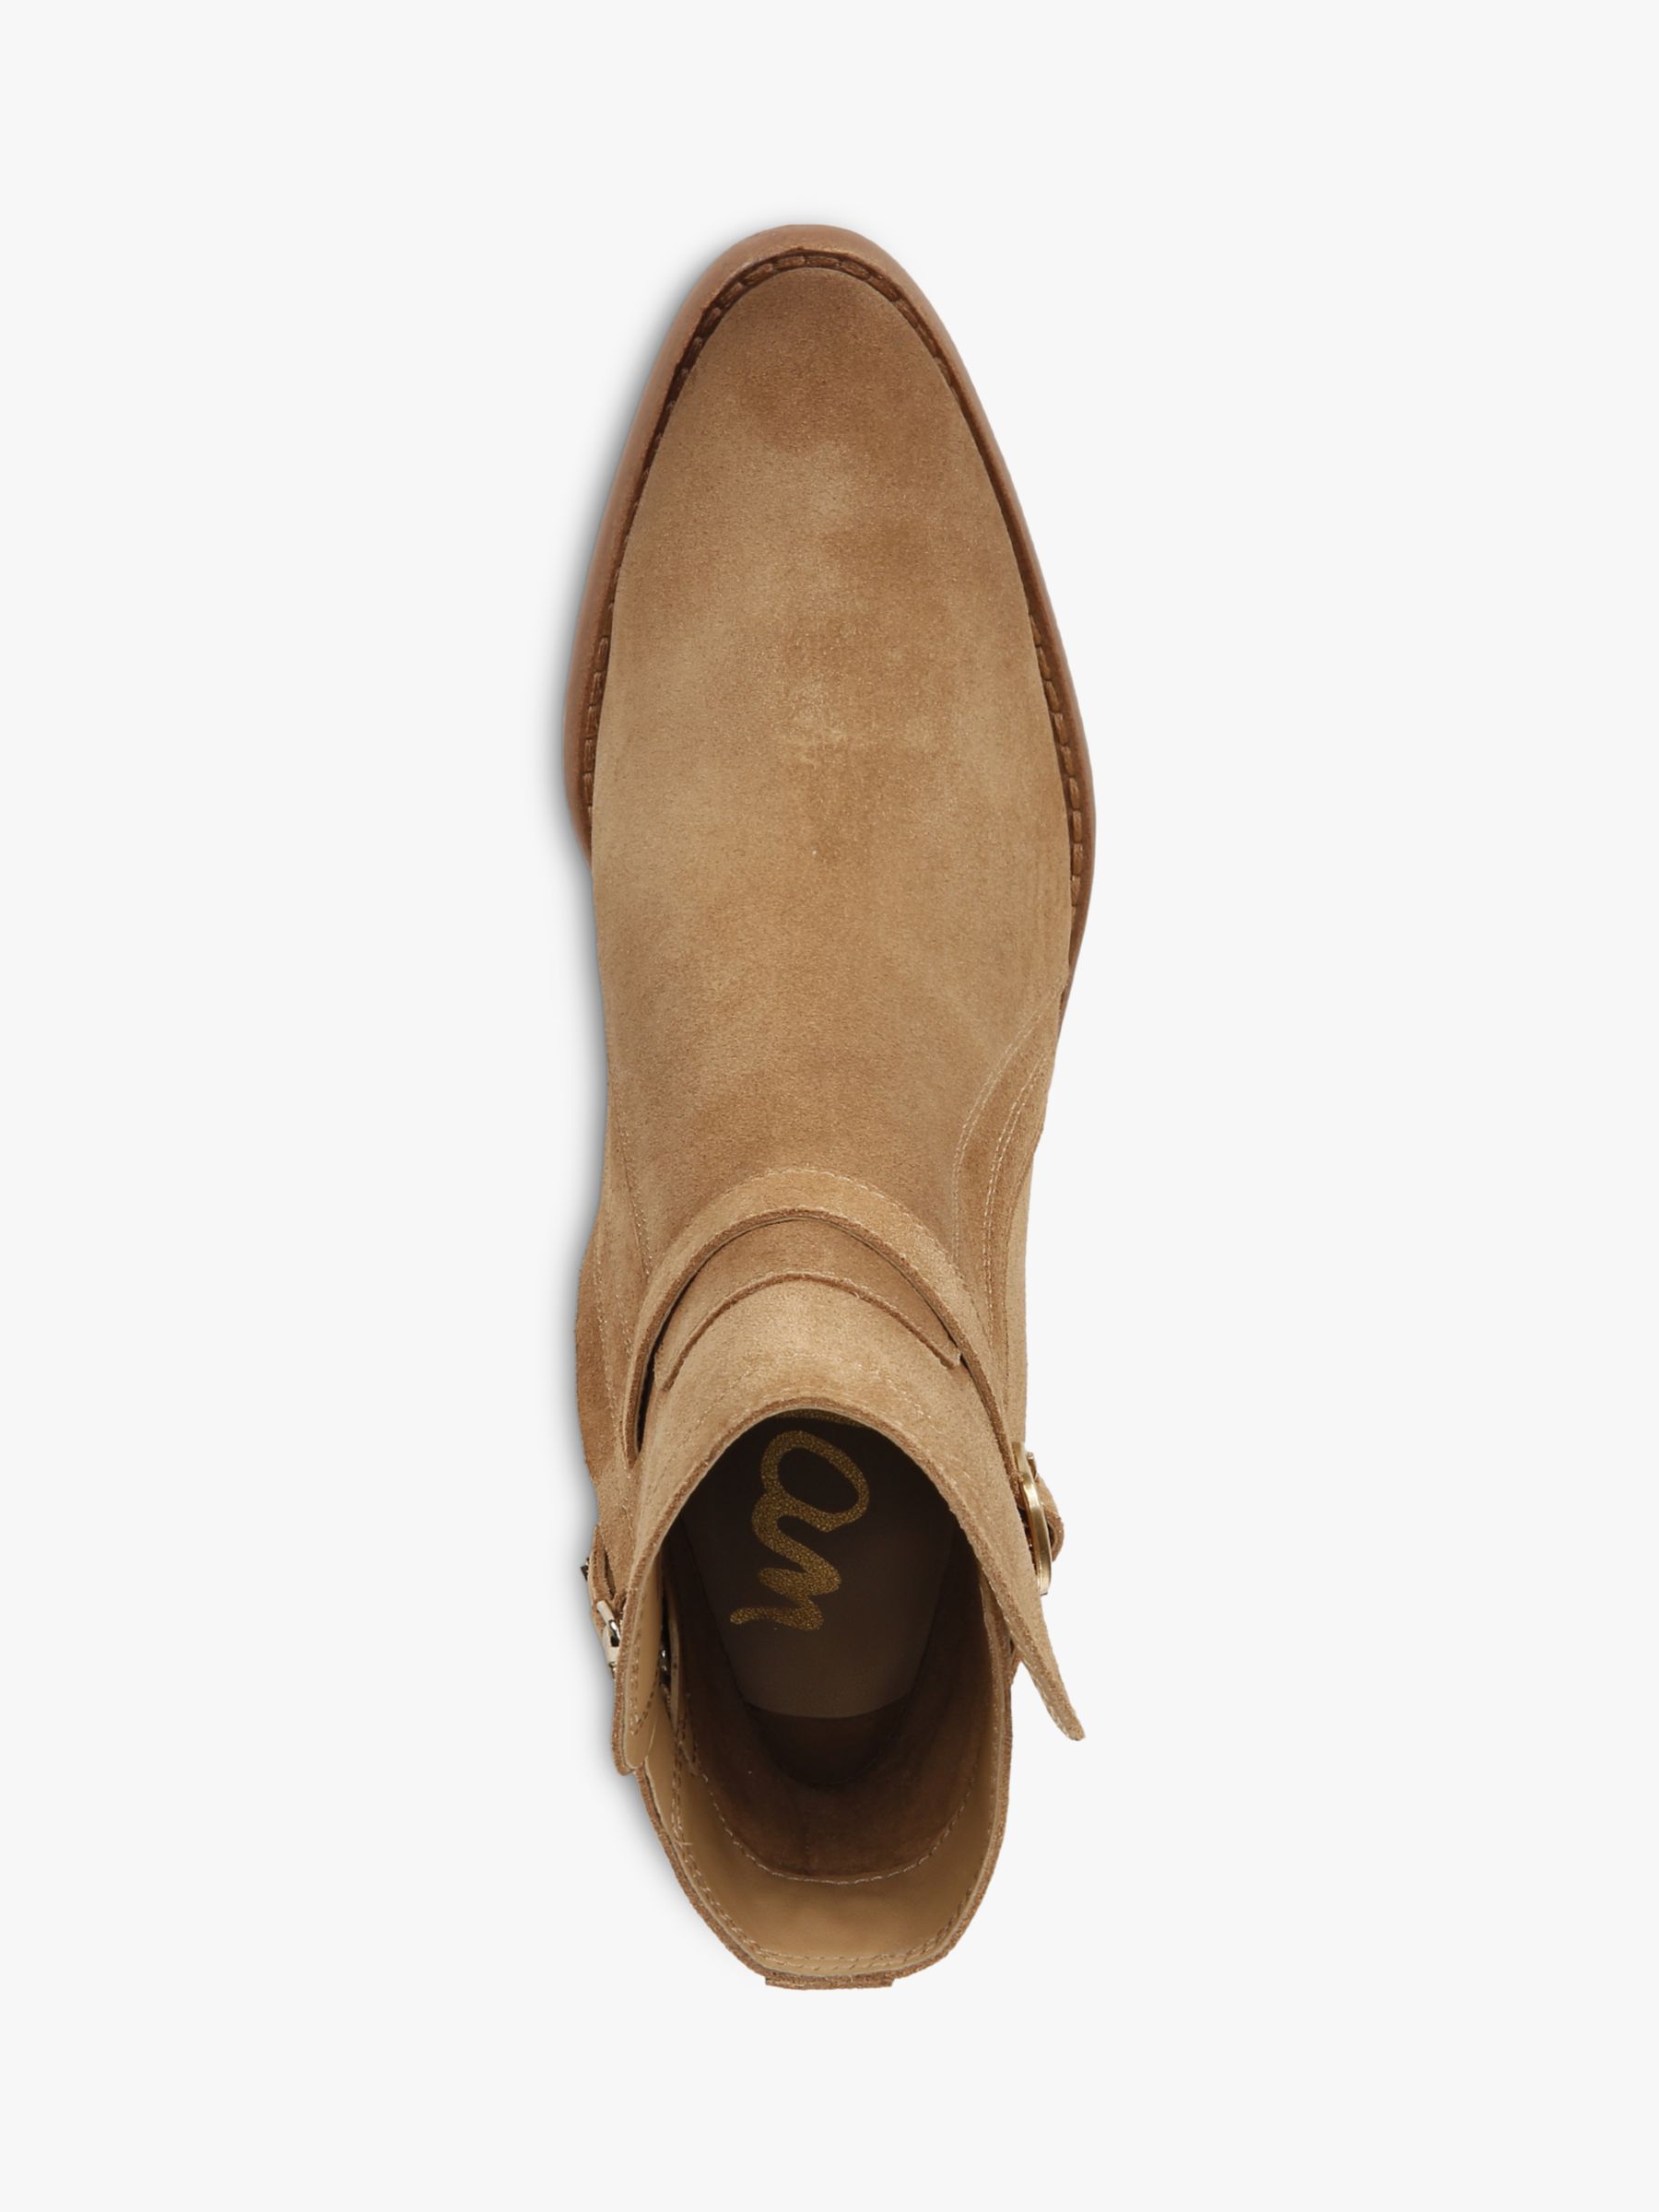 Sam Edelman Simona Leather Ankle Boots, Golden Caramel, 5